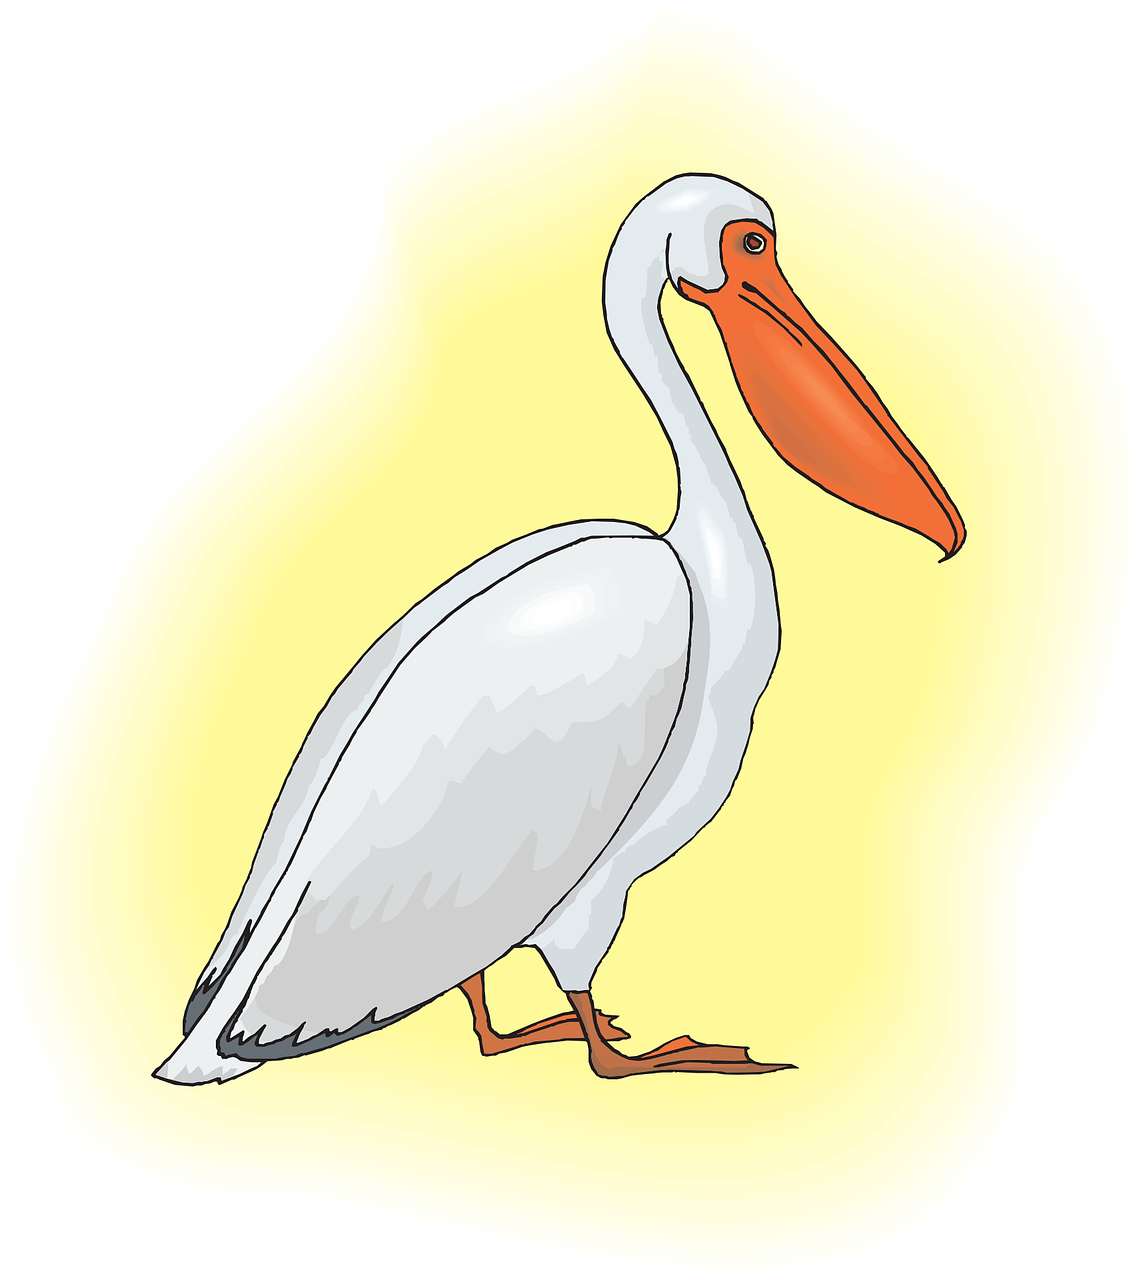 A White Bird With A Long Beak